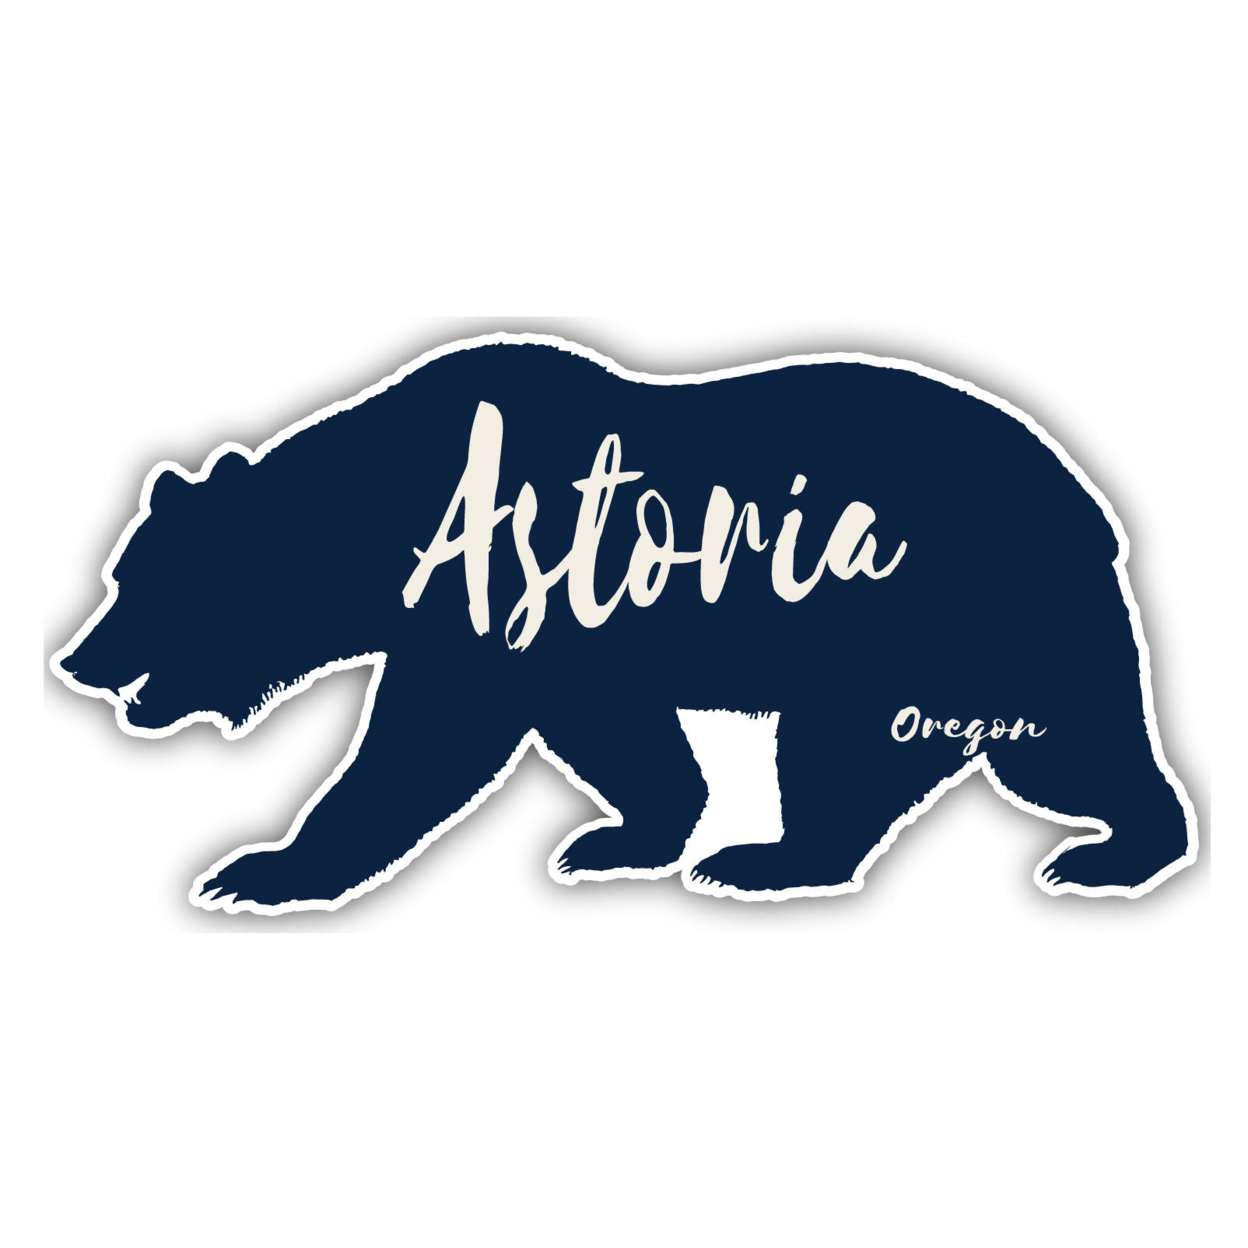 Astoria Oregon Souvenir Decorative Stickers (Choose Theme And Size) - Single Unit, 4-Inch, Bear